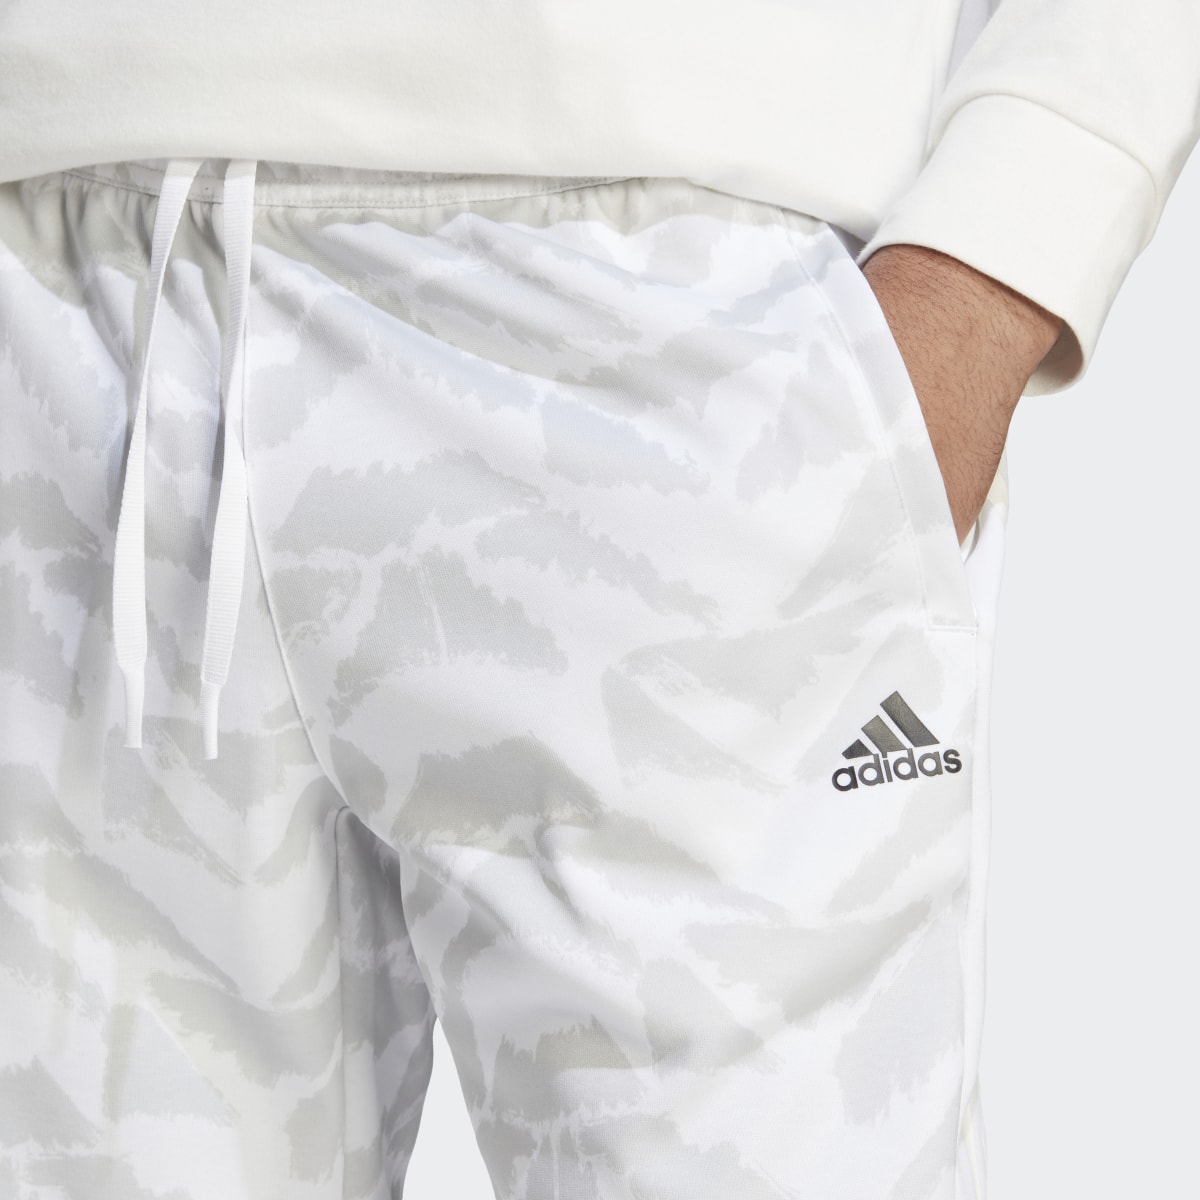 Adidas Pants Deportivos Tiro Suit-Up Lifestyle. 5